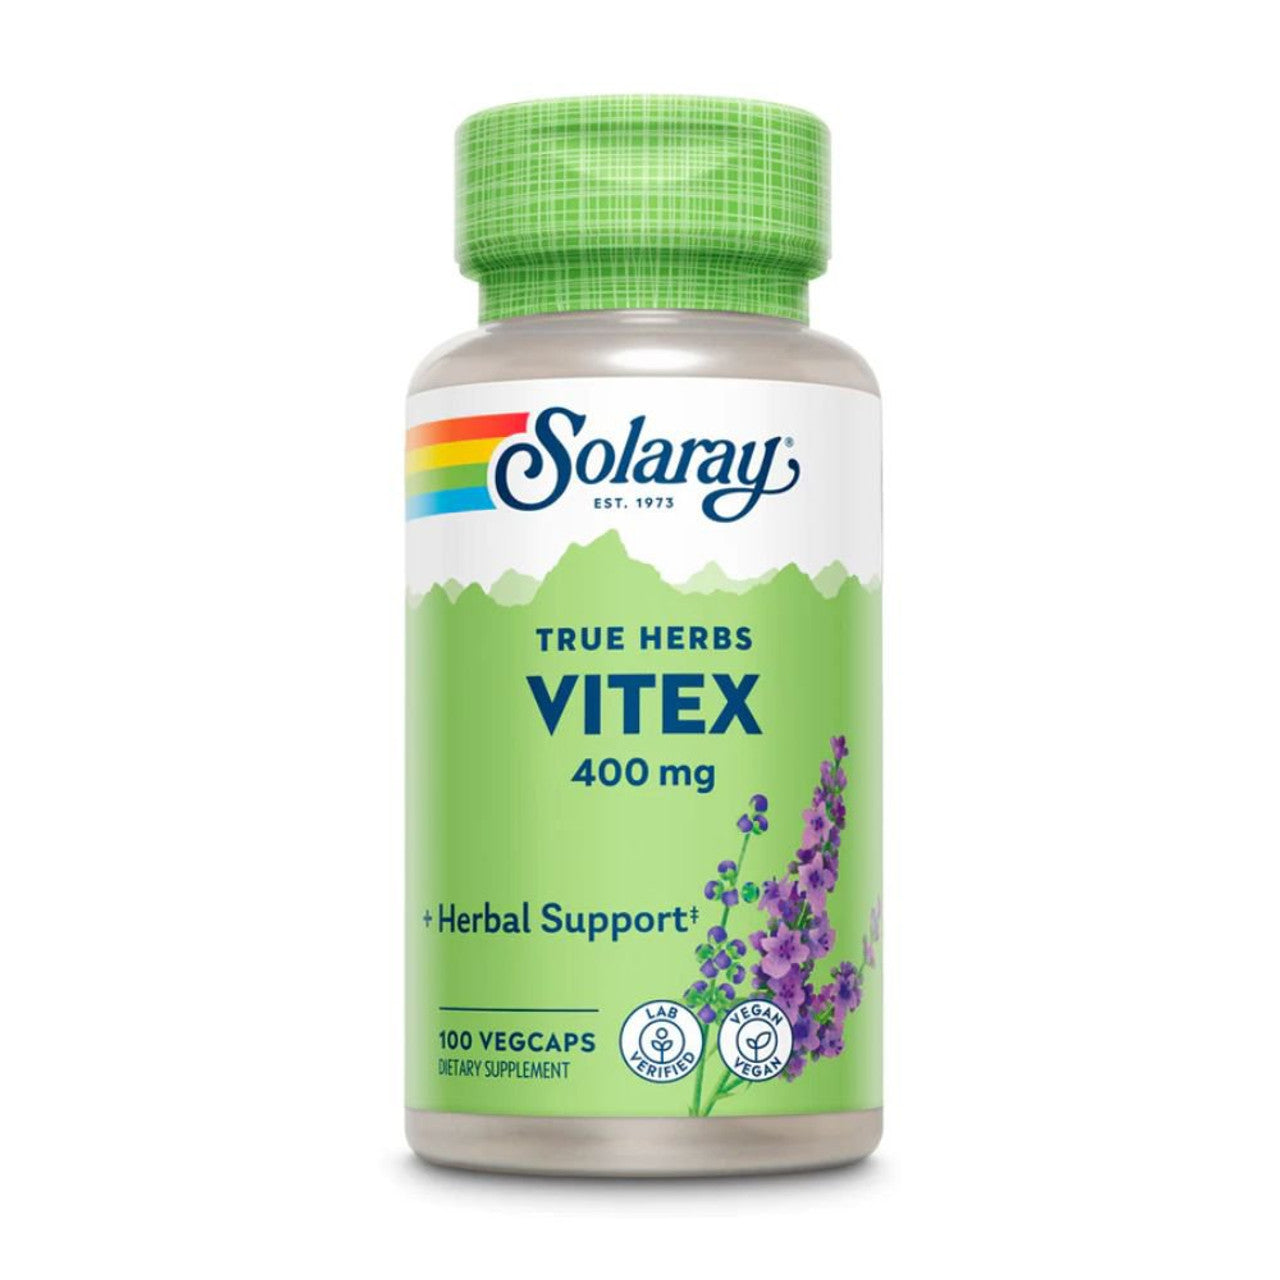 Solaray Vitex 400mg 100 Vegetable Capsules